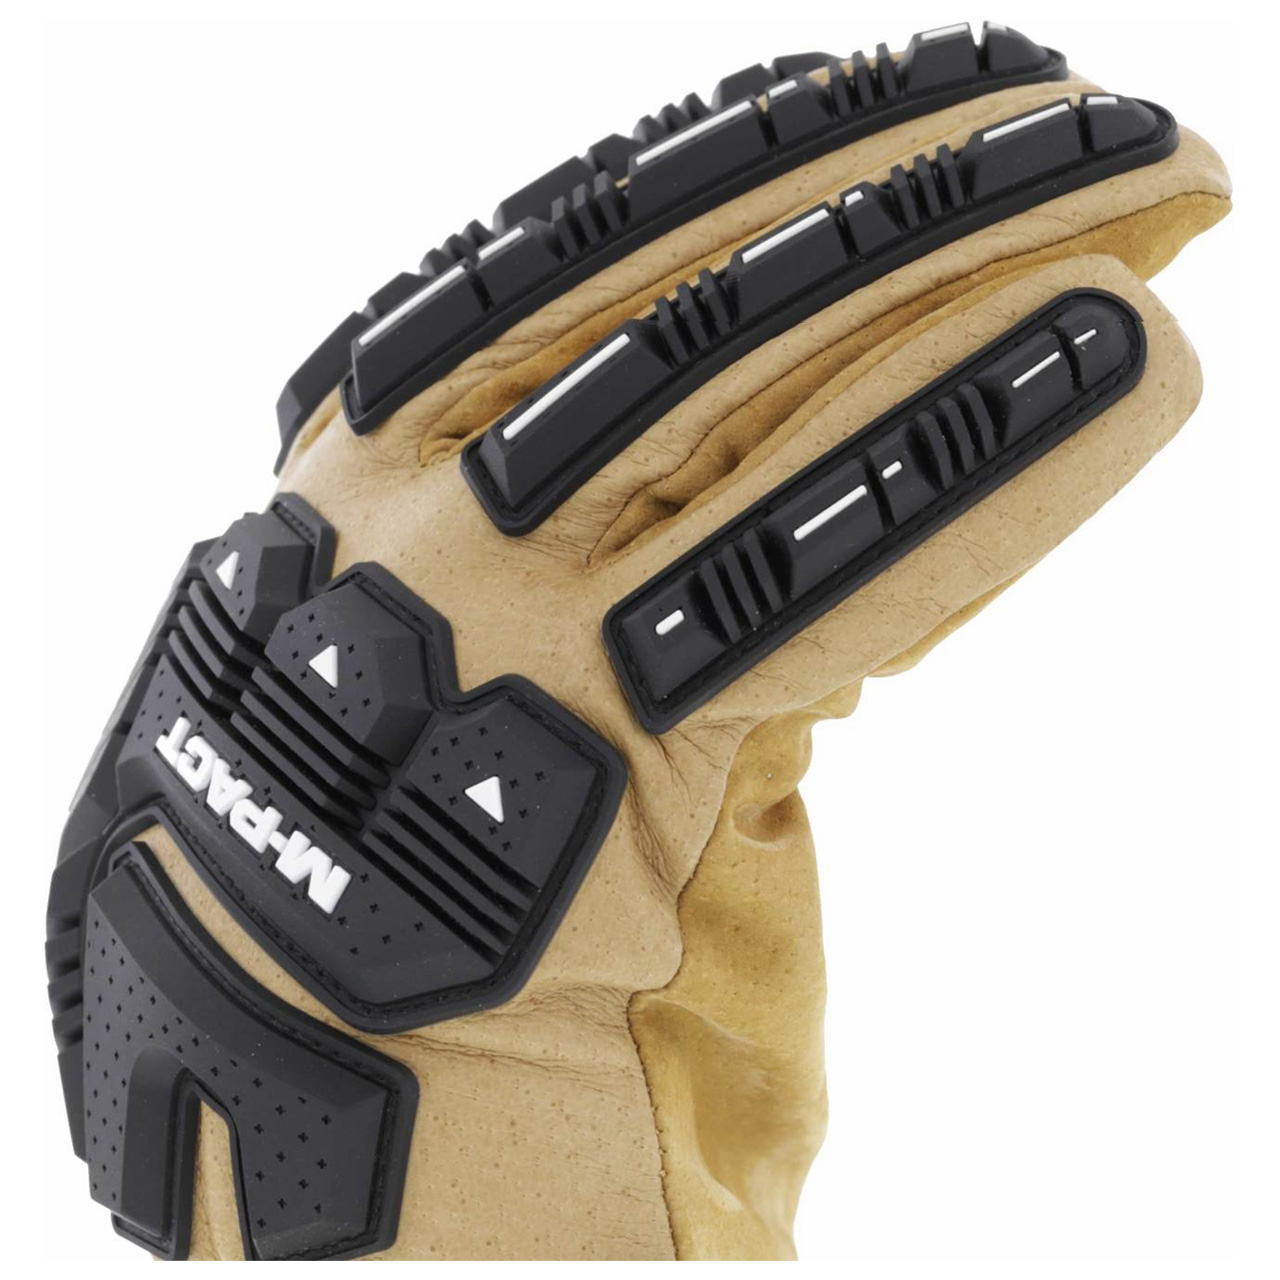 Mechanix Wear DURAHIDE M-PACT LDMP-C75 Heat Resistant Gloves